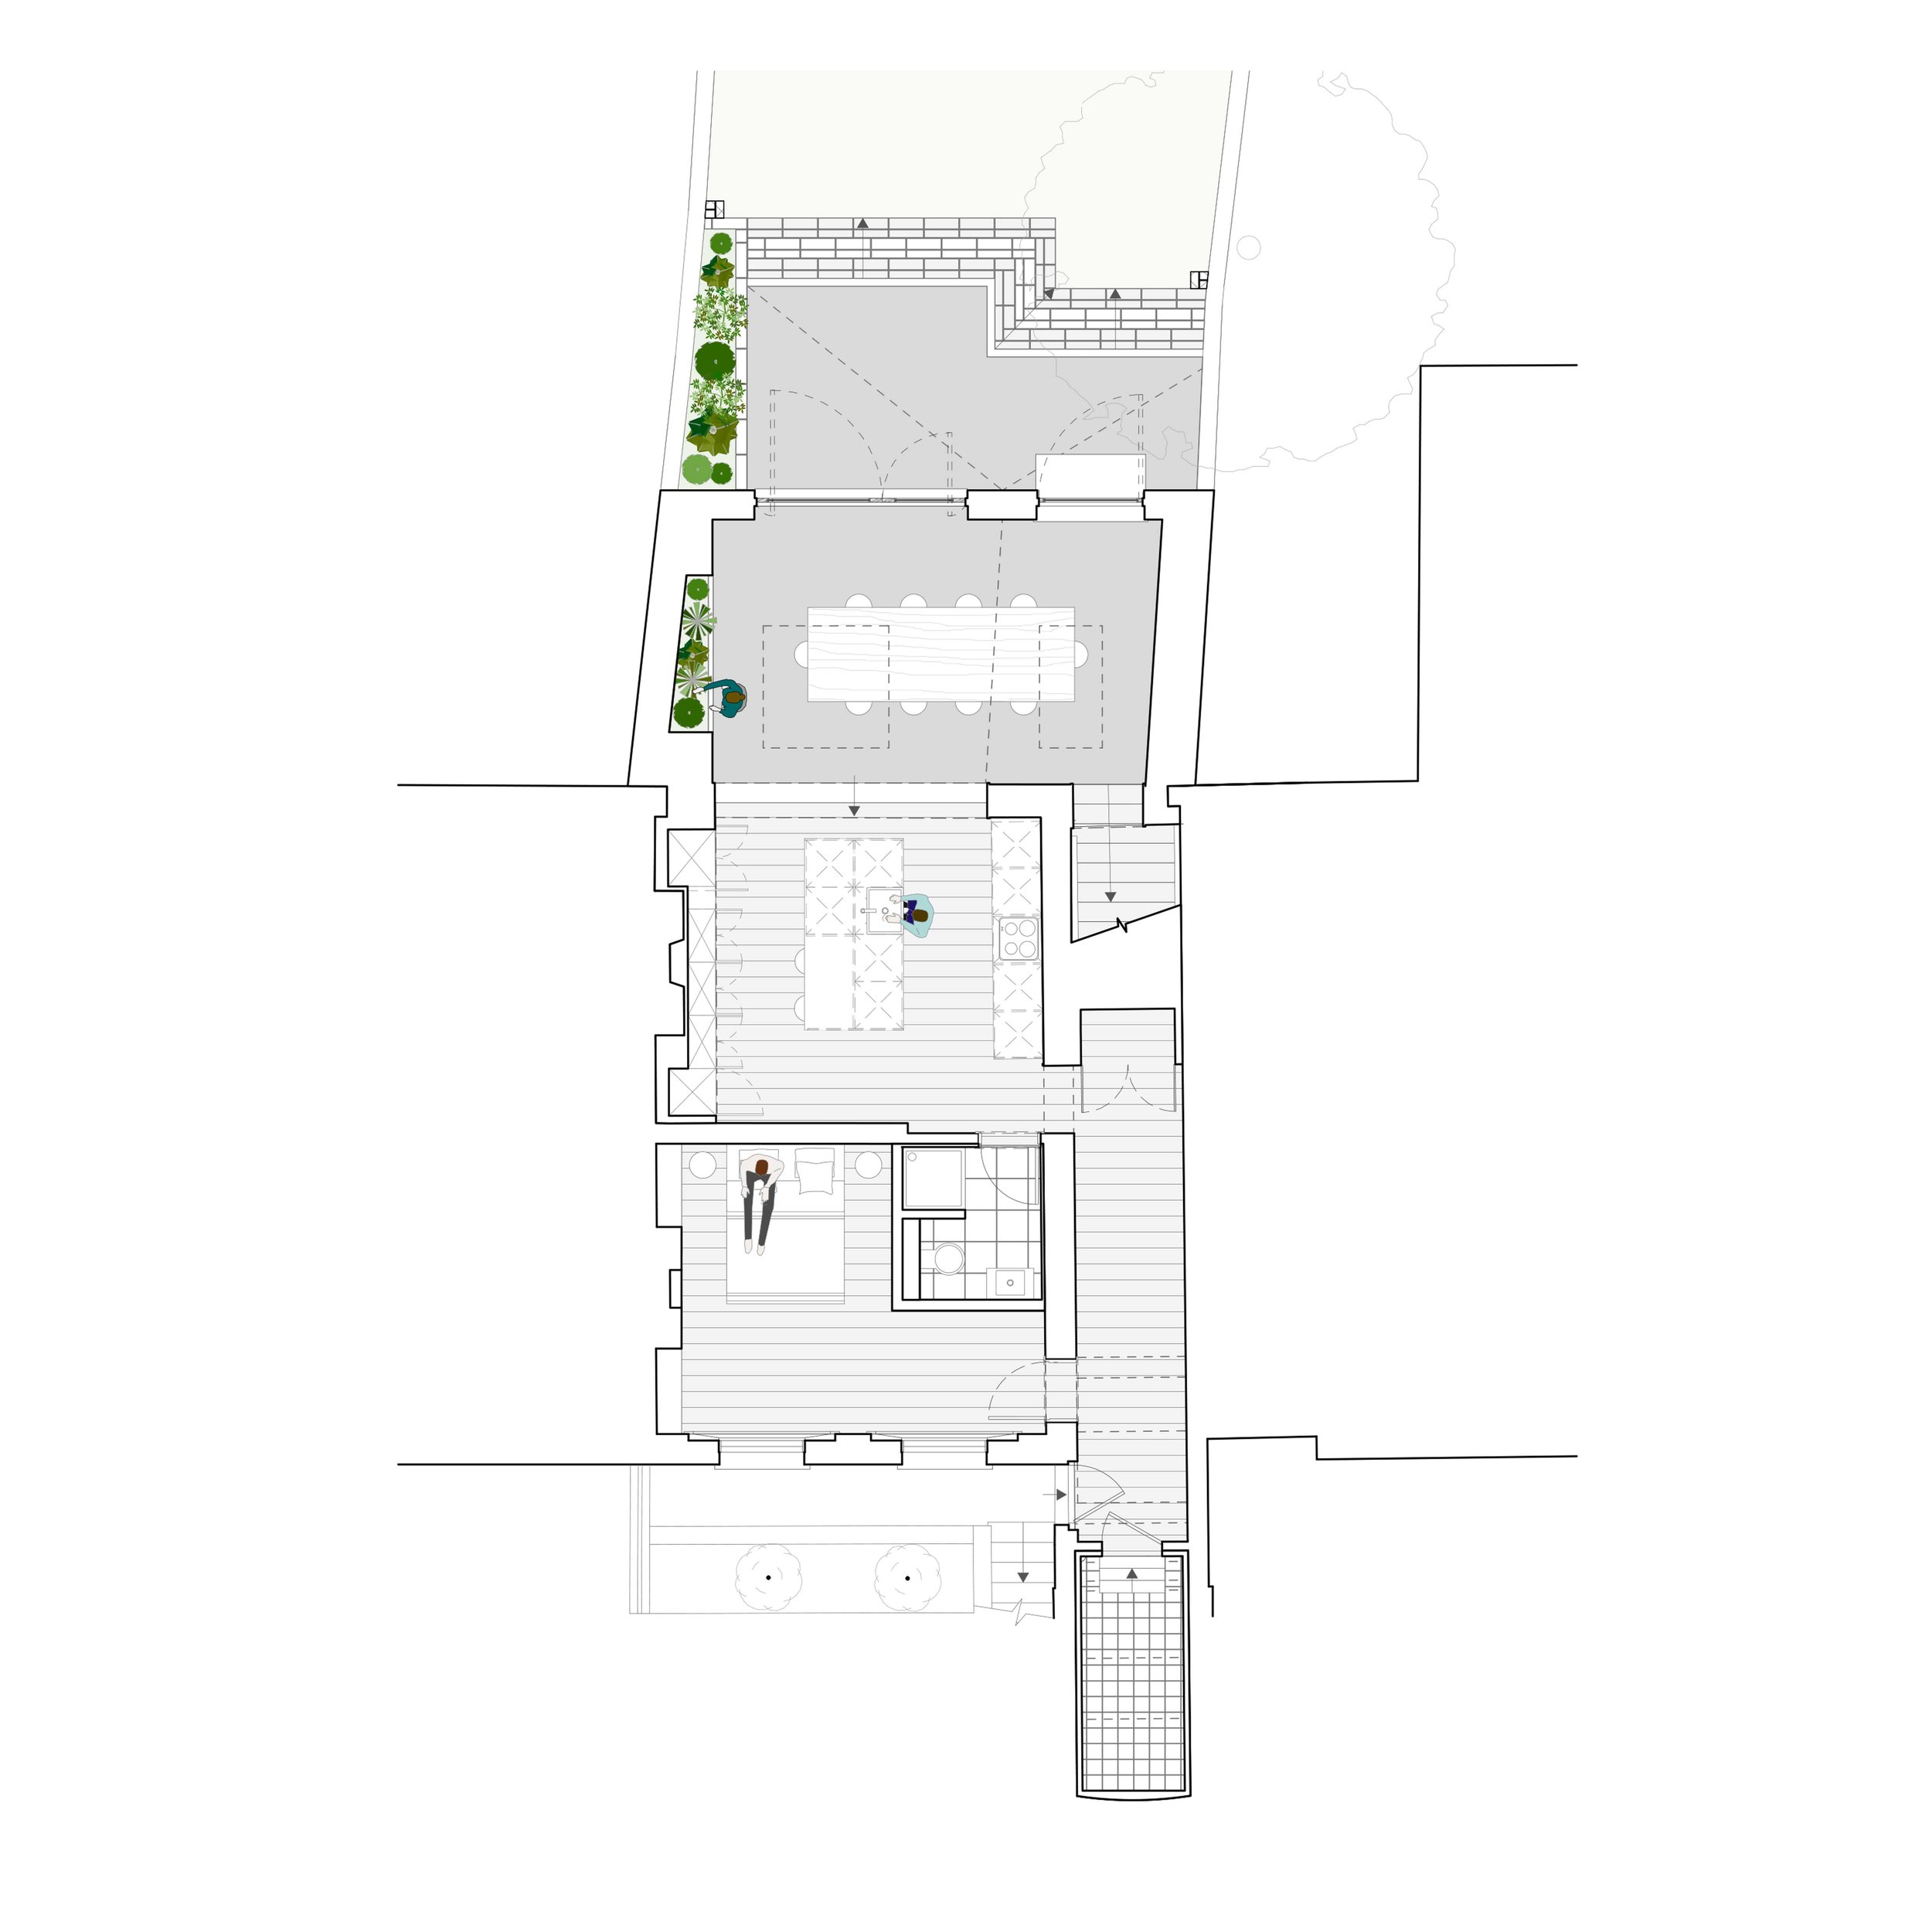 Studio Merlin I Hoj House Proposed Lower Ground Plan.jpg